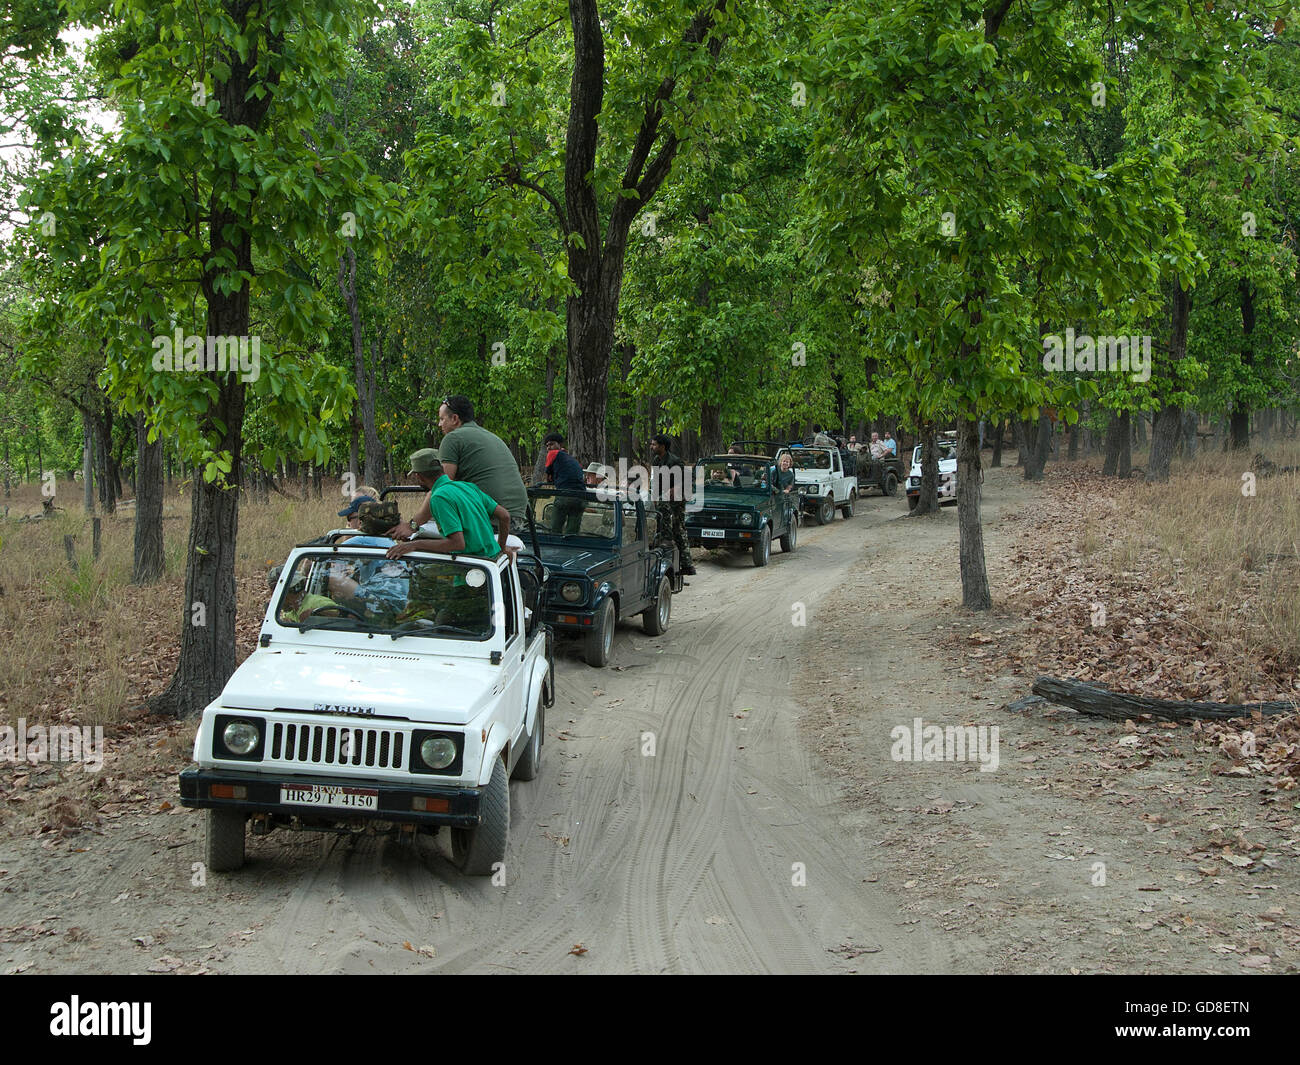 The image of Tourist in Safari vehicles in Bandavgarh national park, India Stock Photo